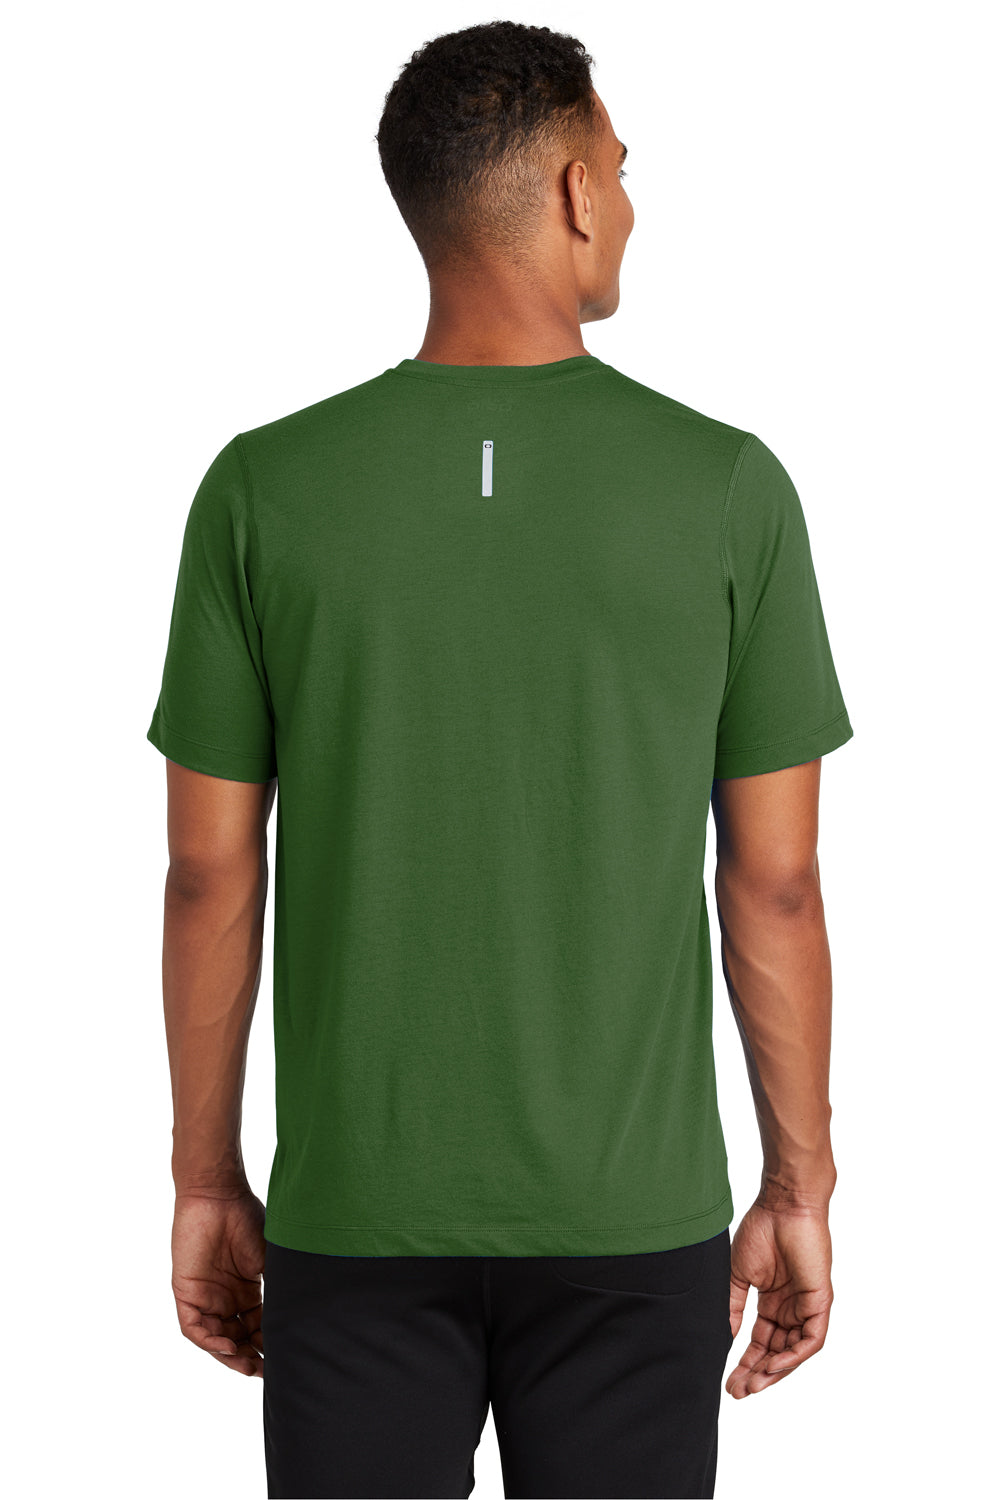 Ogio OE336 Mens Endurance Peak Jersey Moisture Wicking Short Sleeve Crewneck T-Shirt Green Back